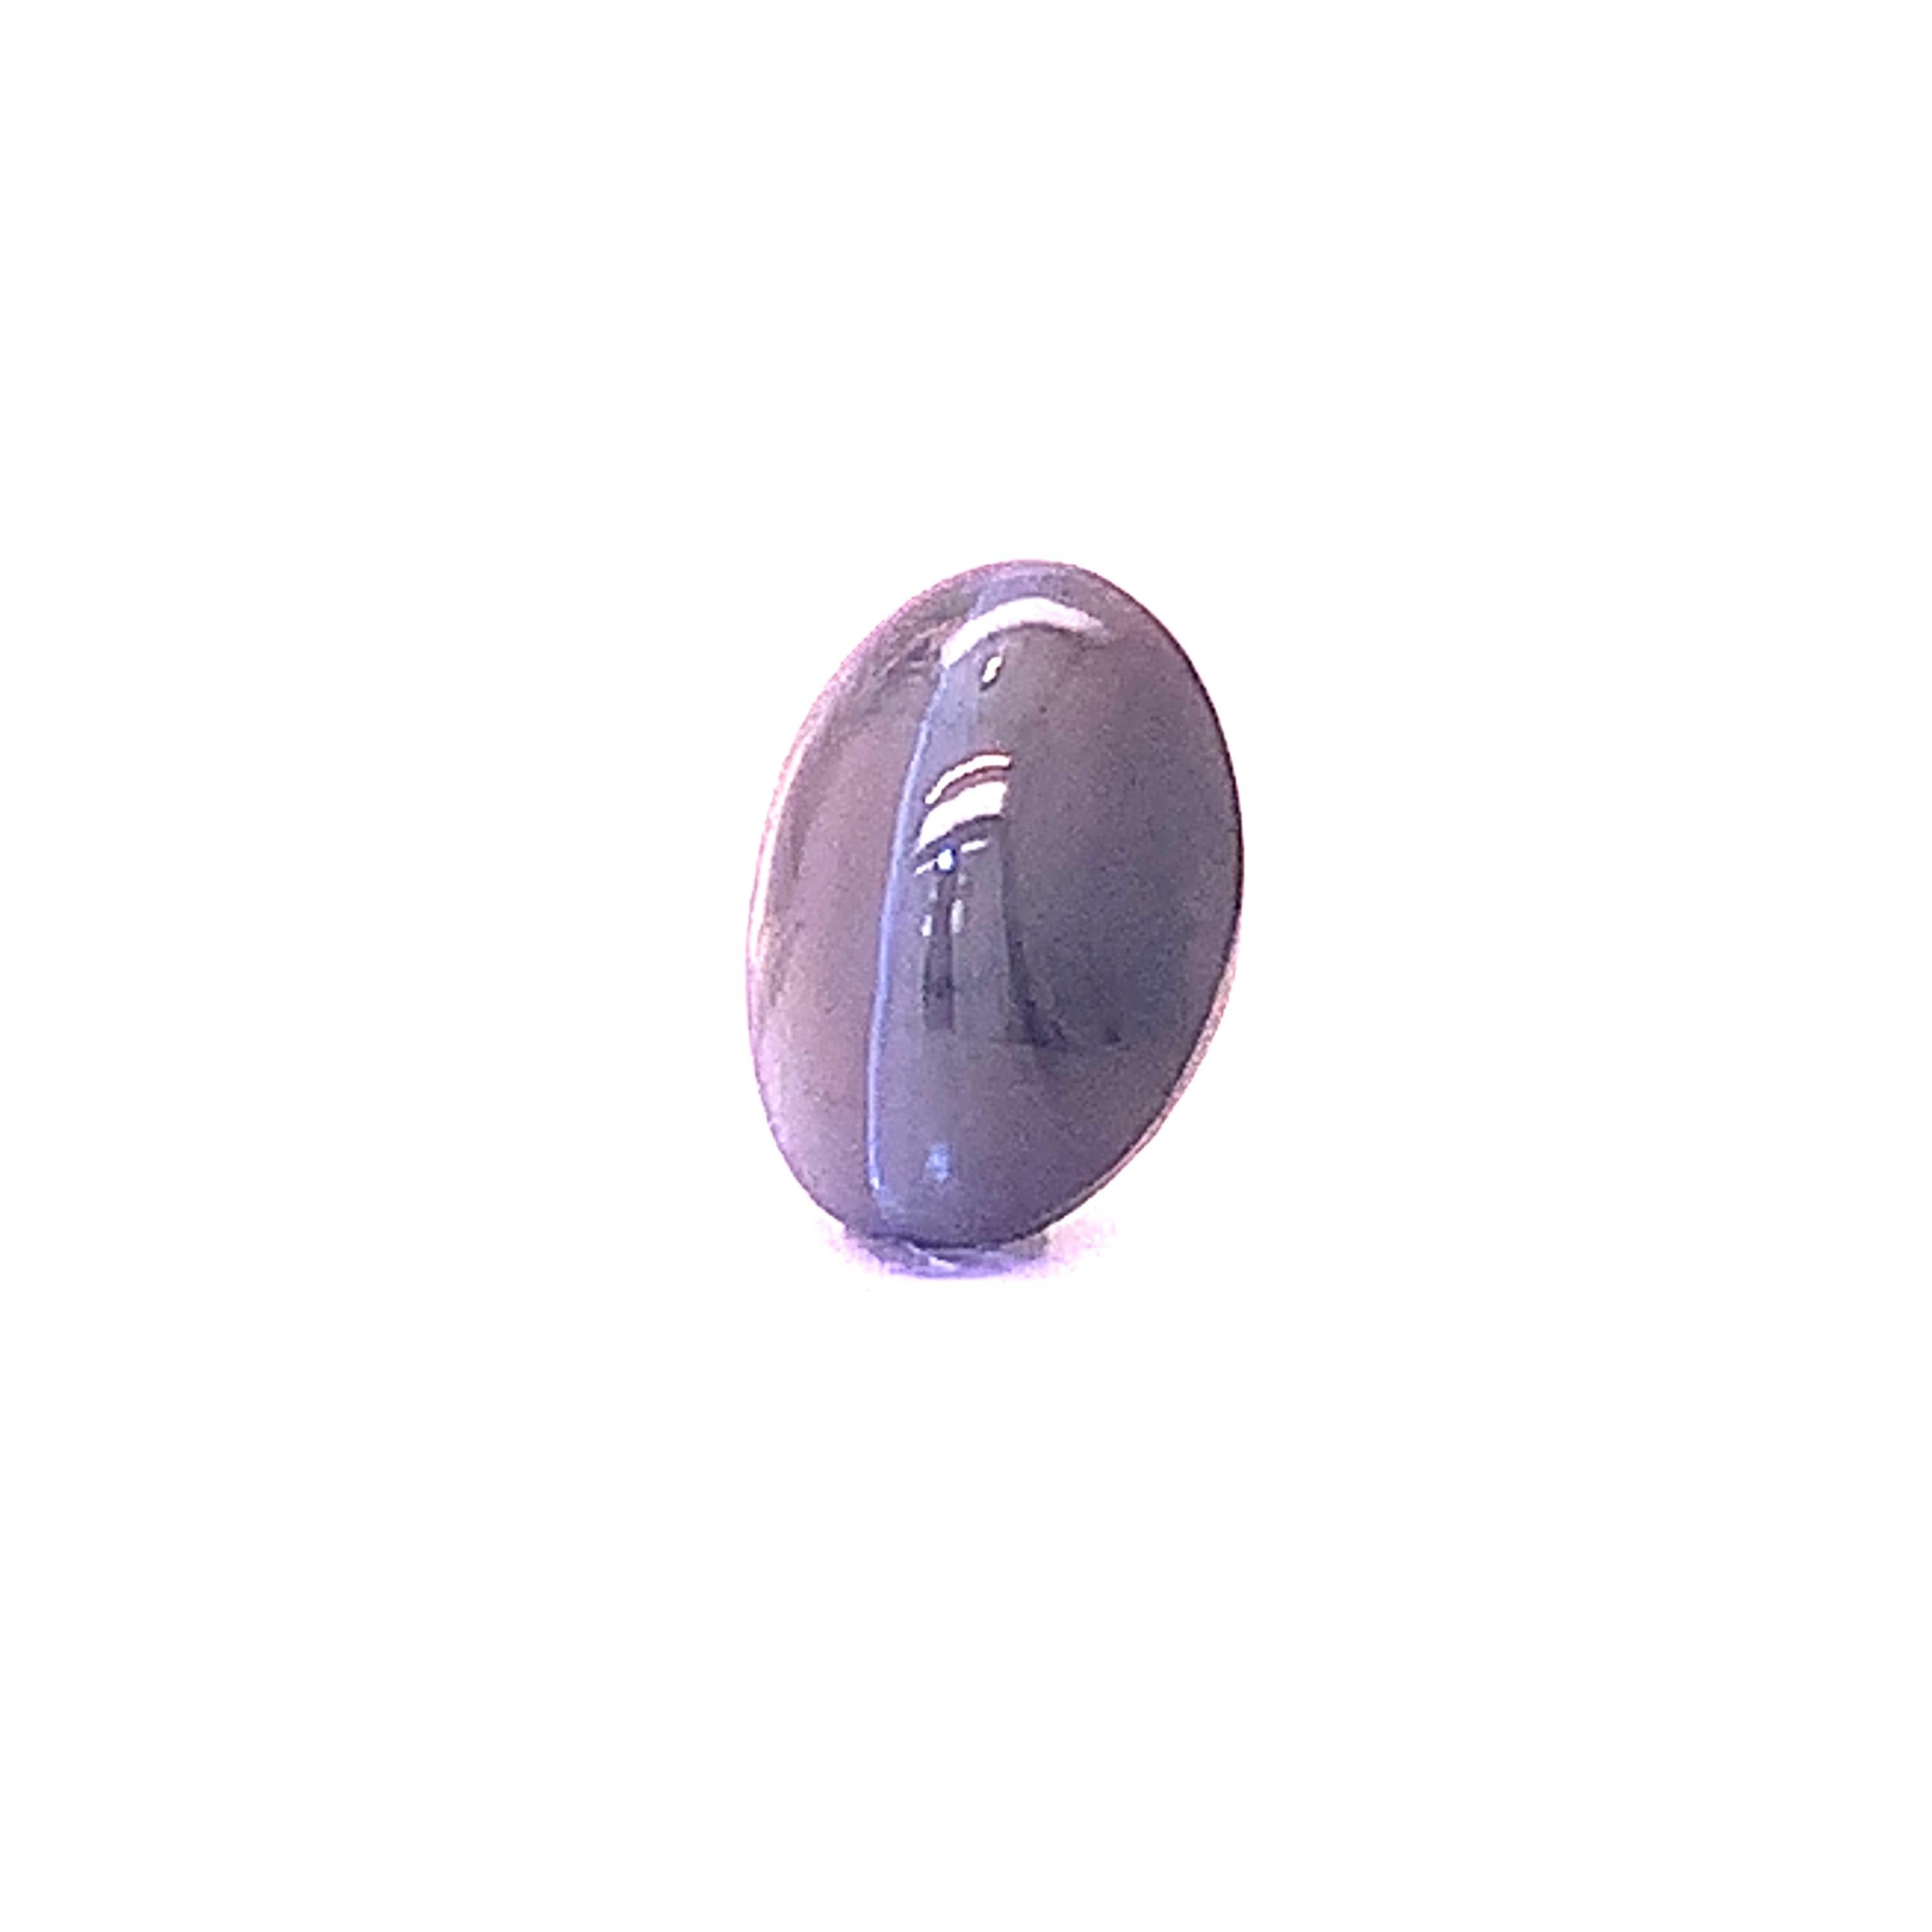 Cat’s Eye Alexandrite Chrysoberyl, 5.24 Carat Loose Gemstone, GIA Certified  For Sale 1